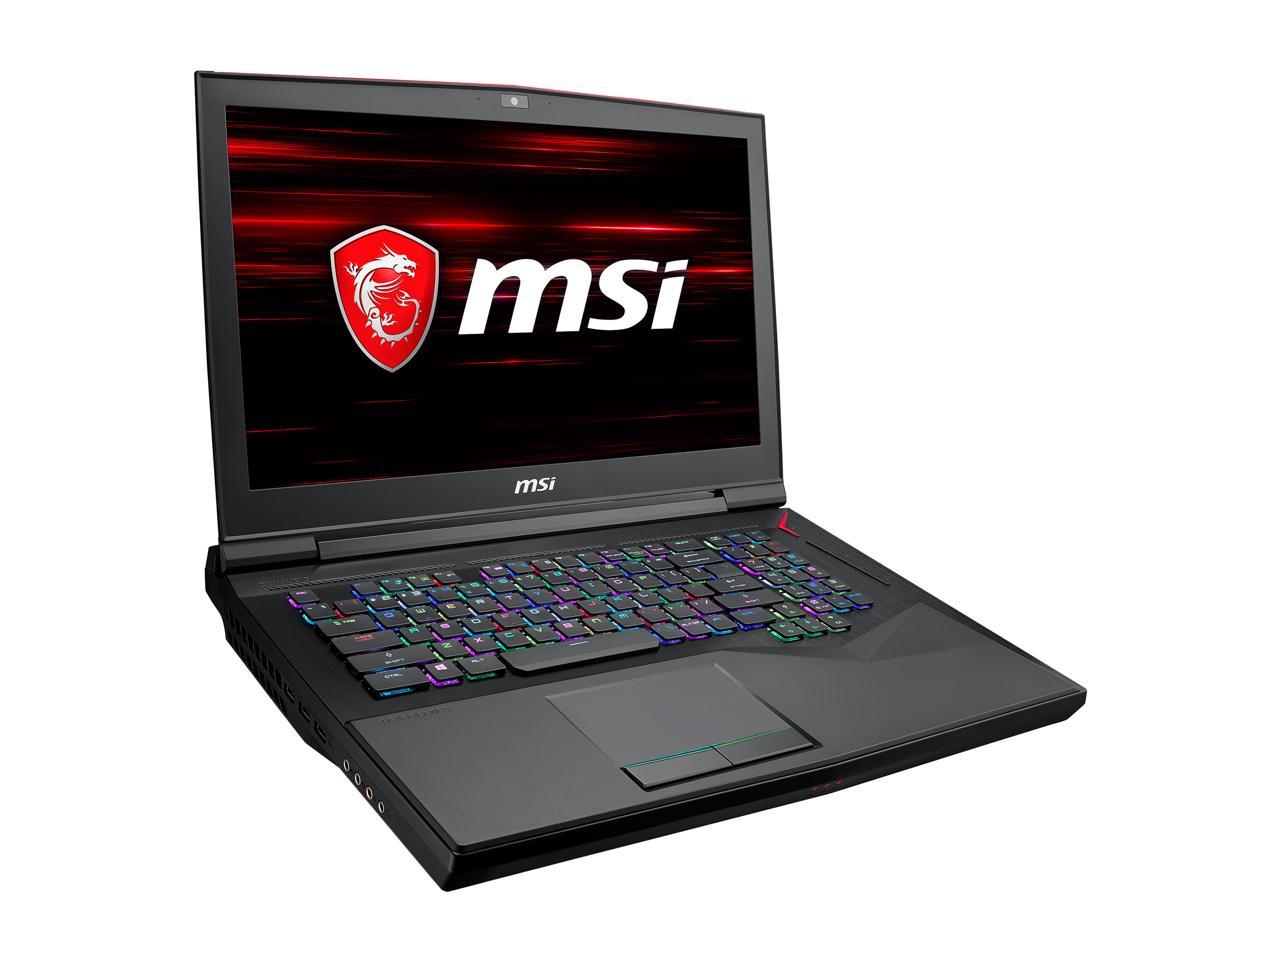 MSI GT75 Titan 10SF-477 - 17.3" 144 Hz - Intel Core i7-10750H - GeForce RTX 2070 Max-Q - 32 GB DDR4 - 1 TB SSD - Windows 10 Home - Gaming Laptop